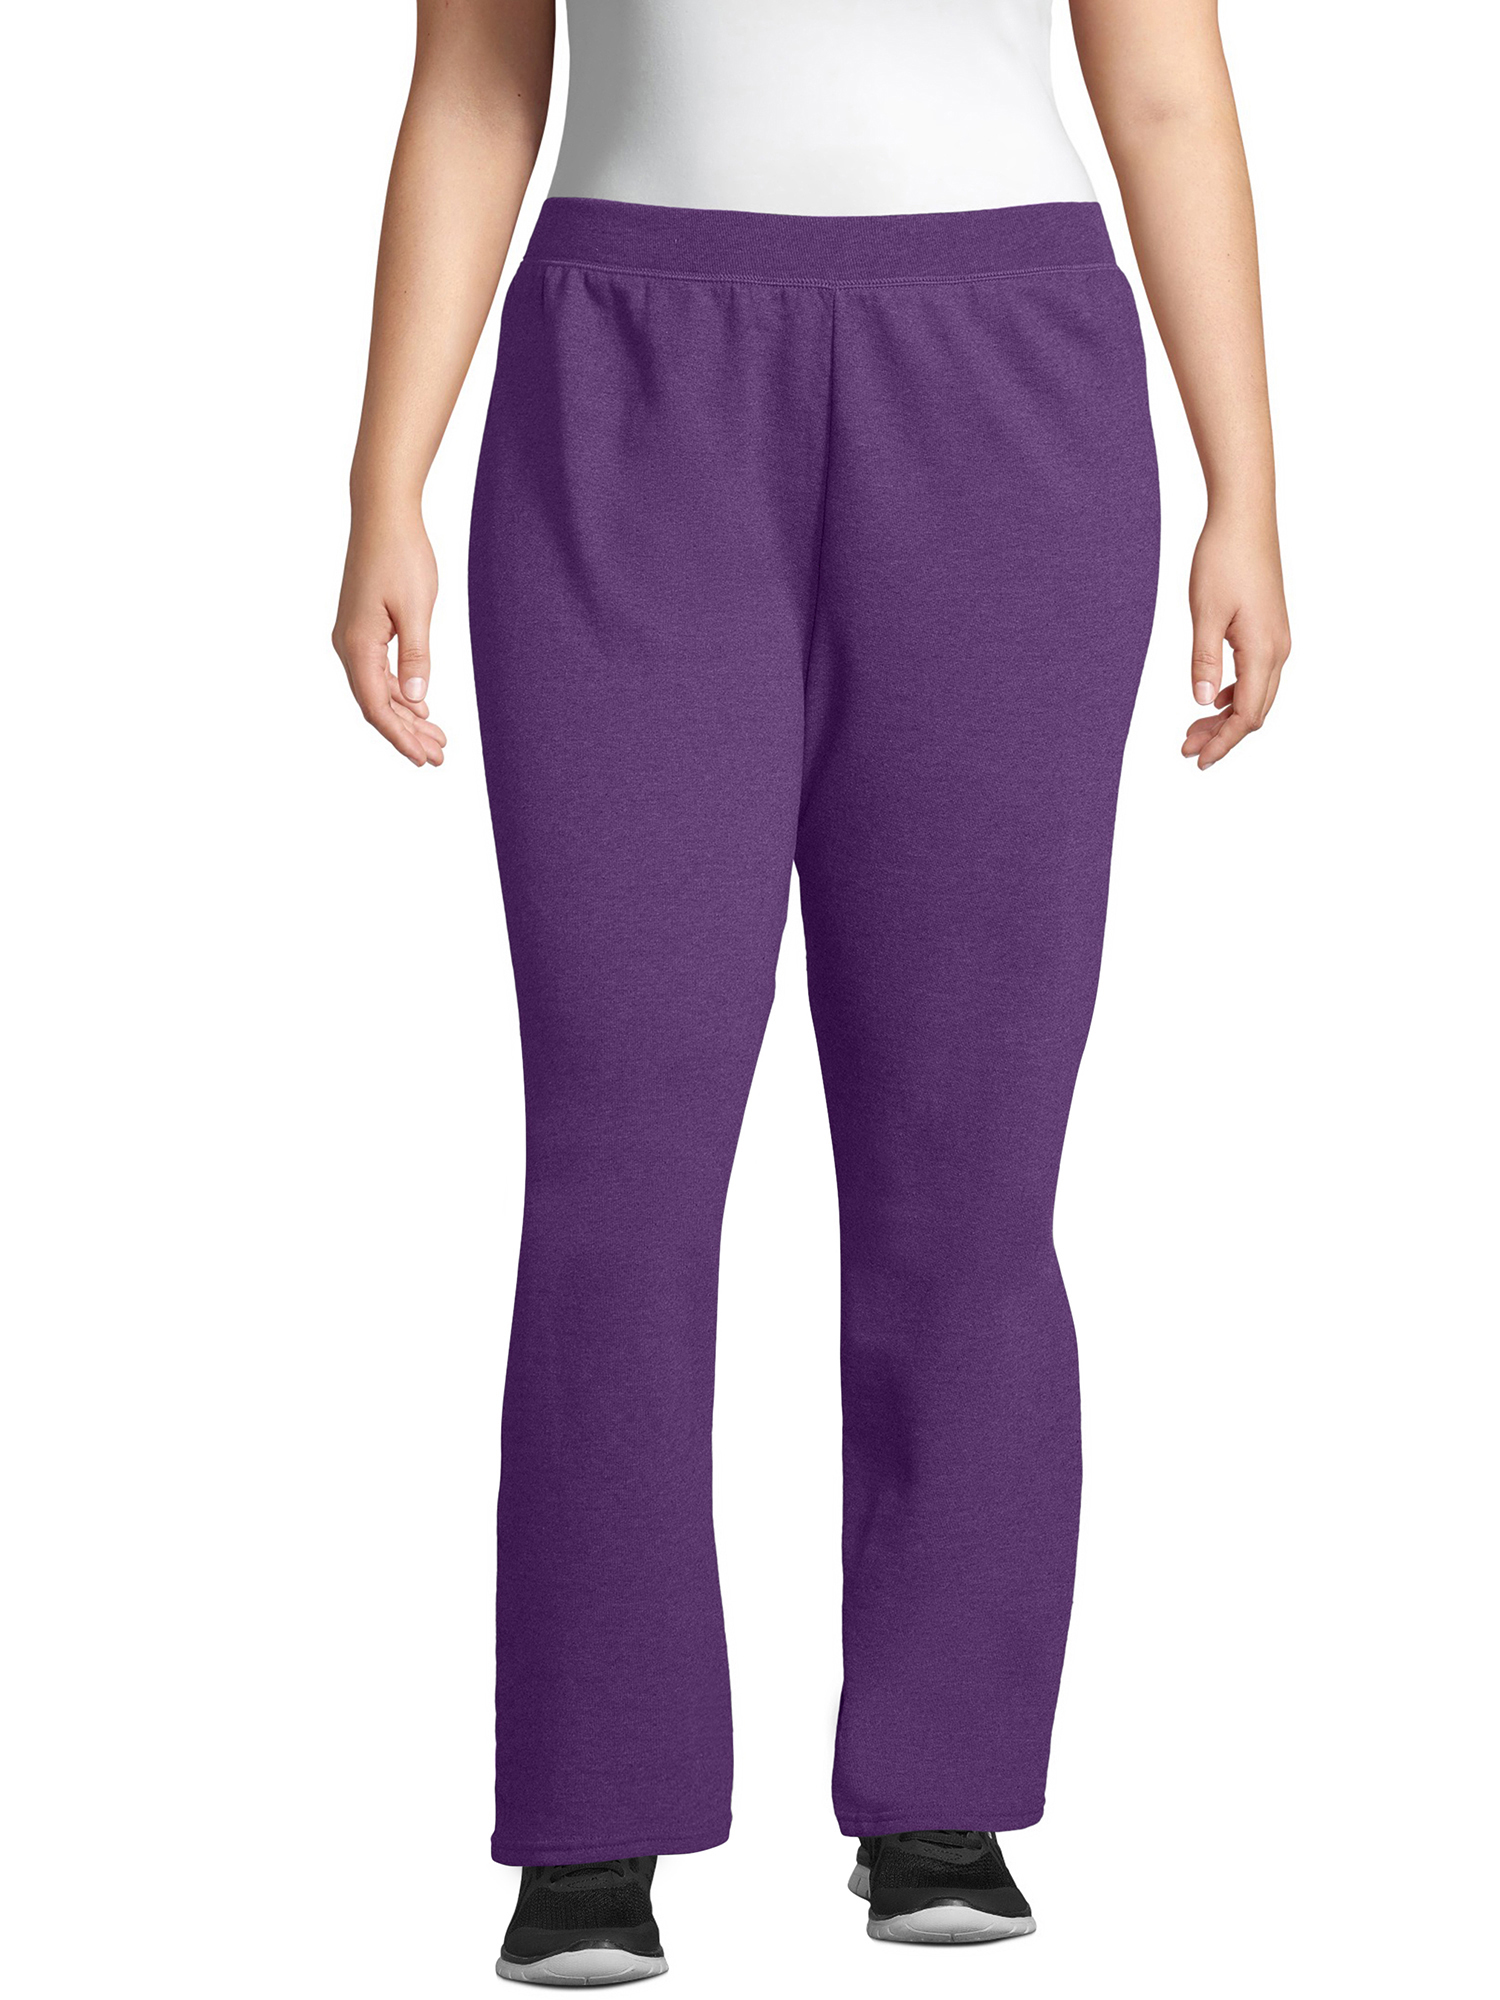 JMS by Hanes Women's Plus Size Fleece Sweatpants (Also Petite Sizes) - image 1 of 6